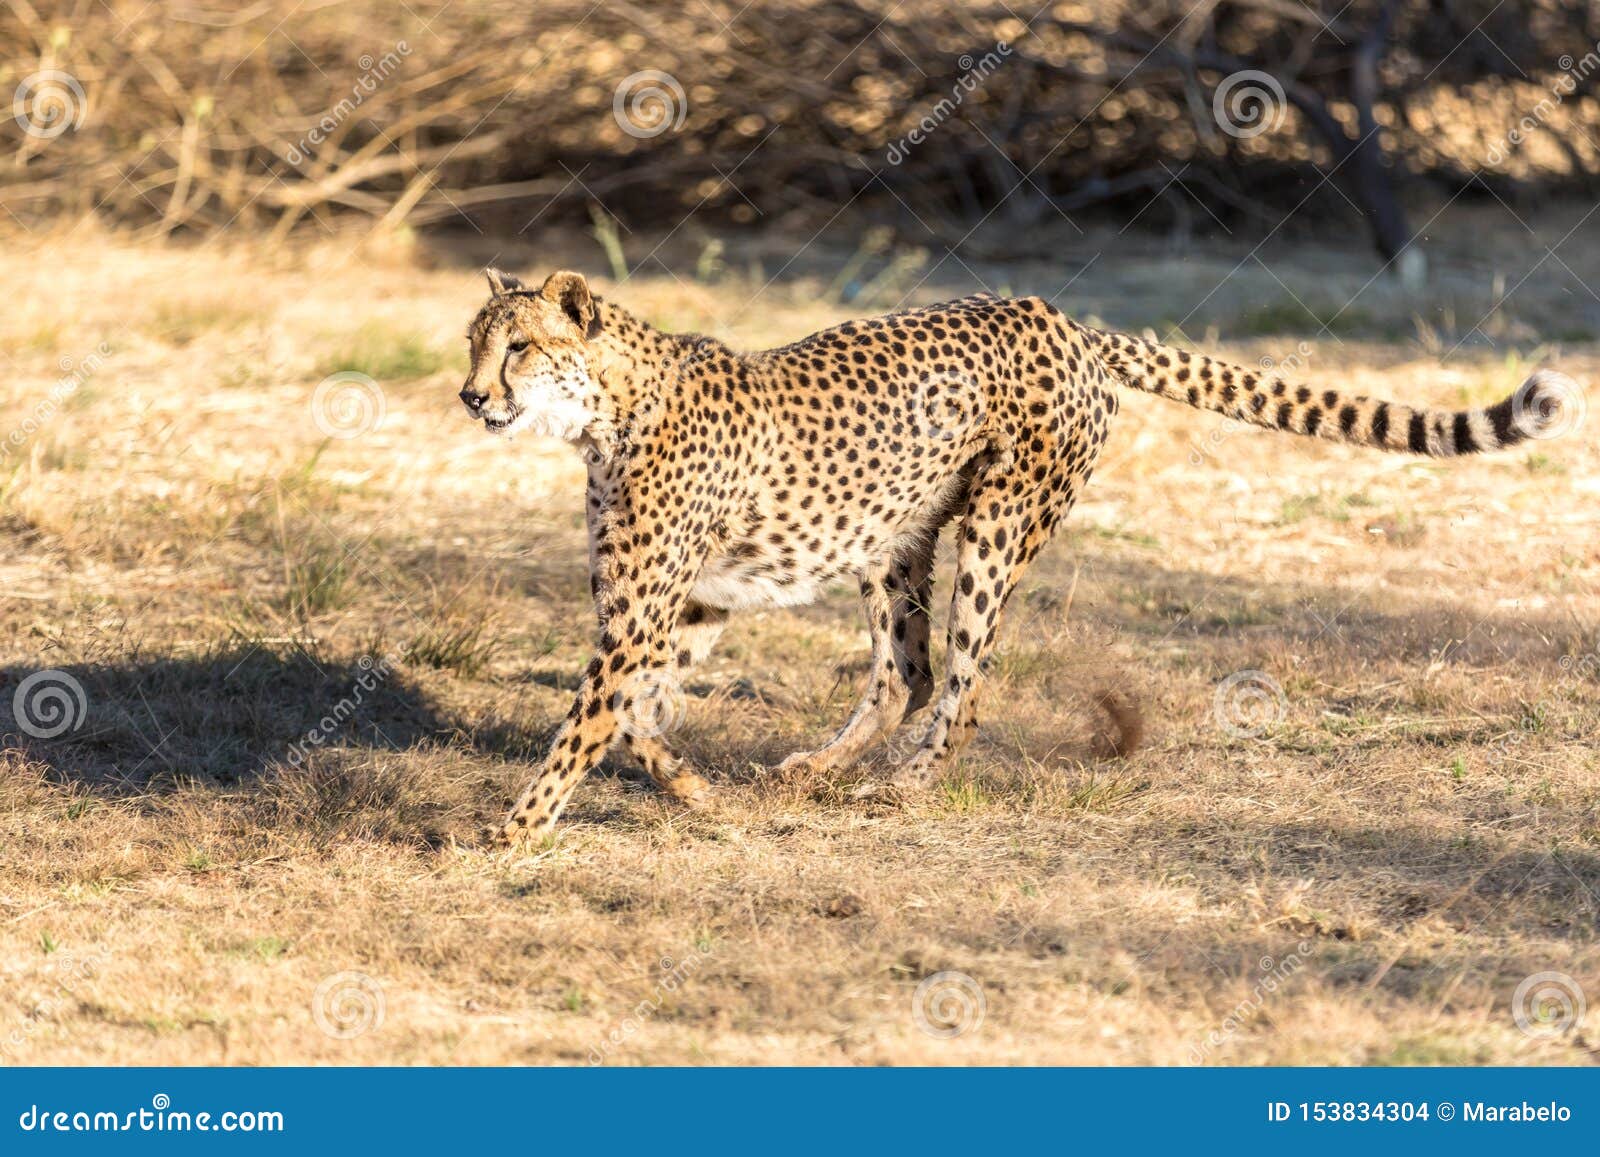 cheetah running in south africa, acinonyx jubatus.